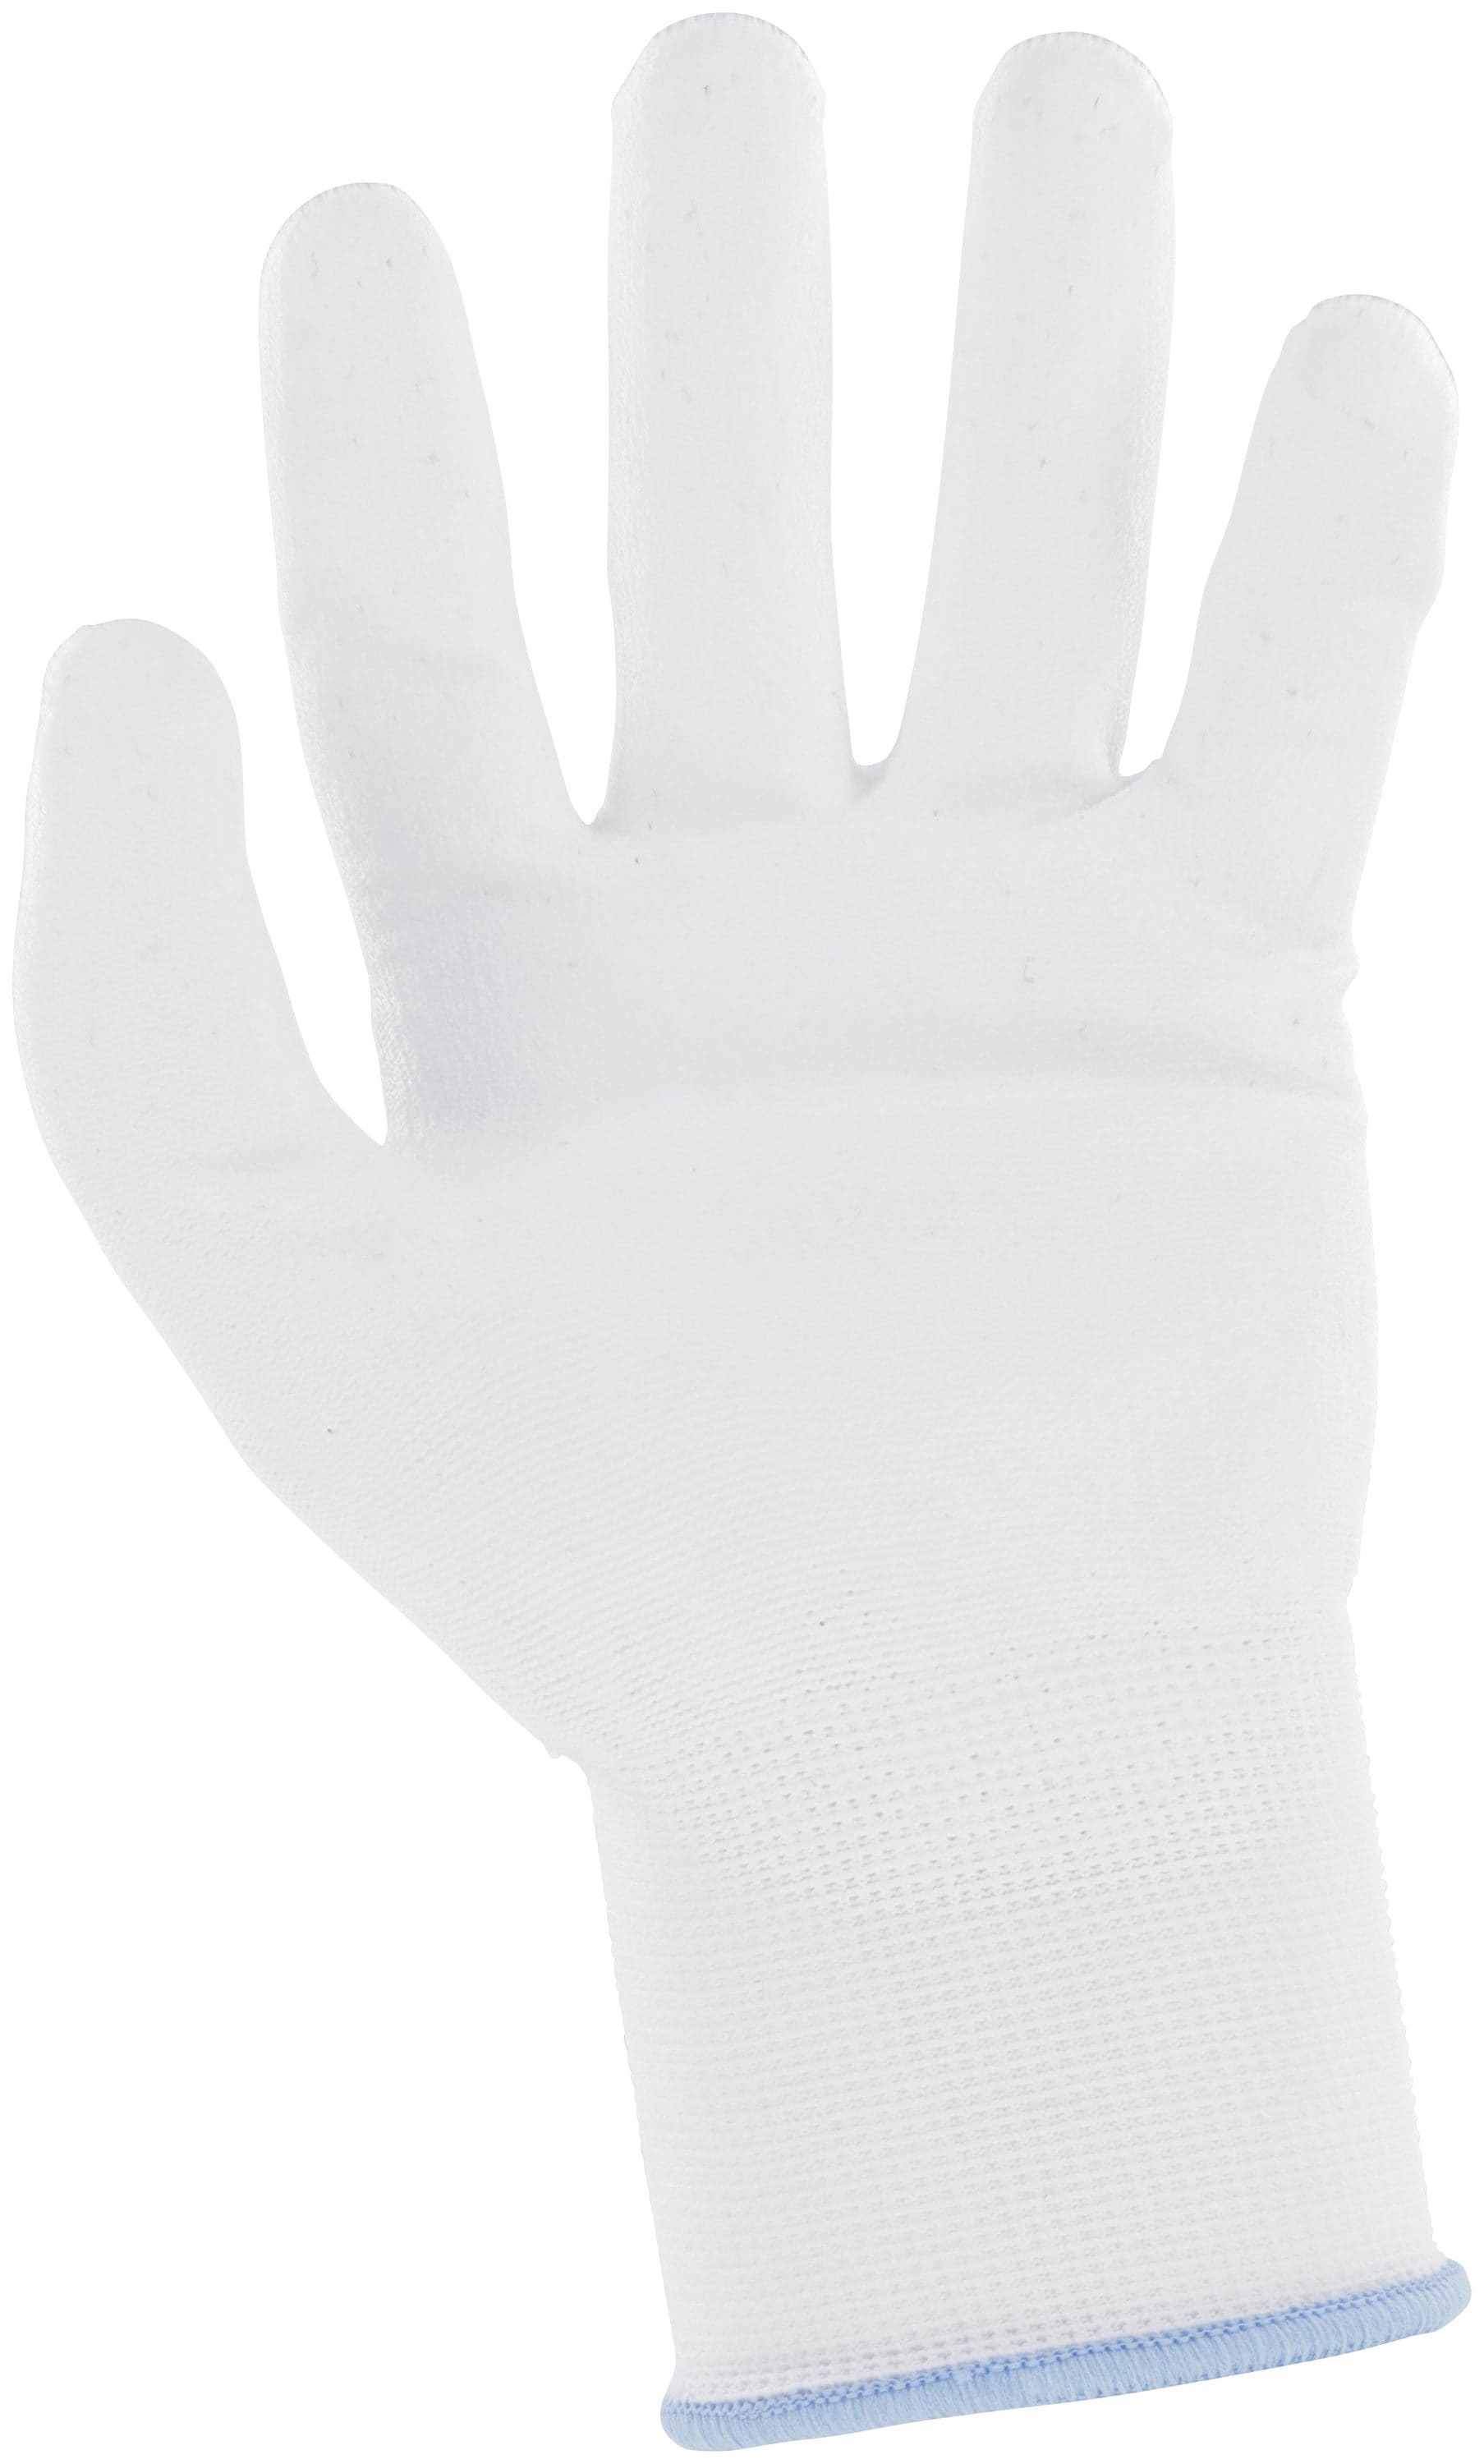 MECHANIX WEAR Small/Medium Blue Nitrile Dipped Nitrile Gloves, (1